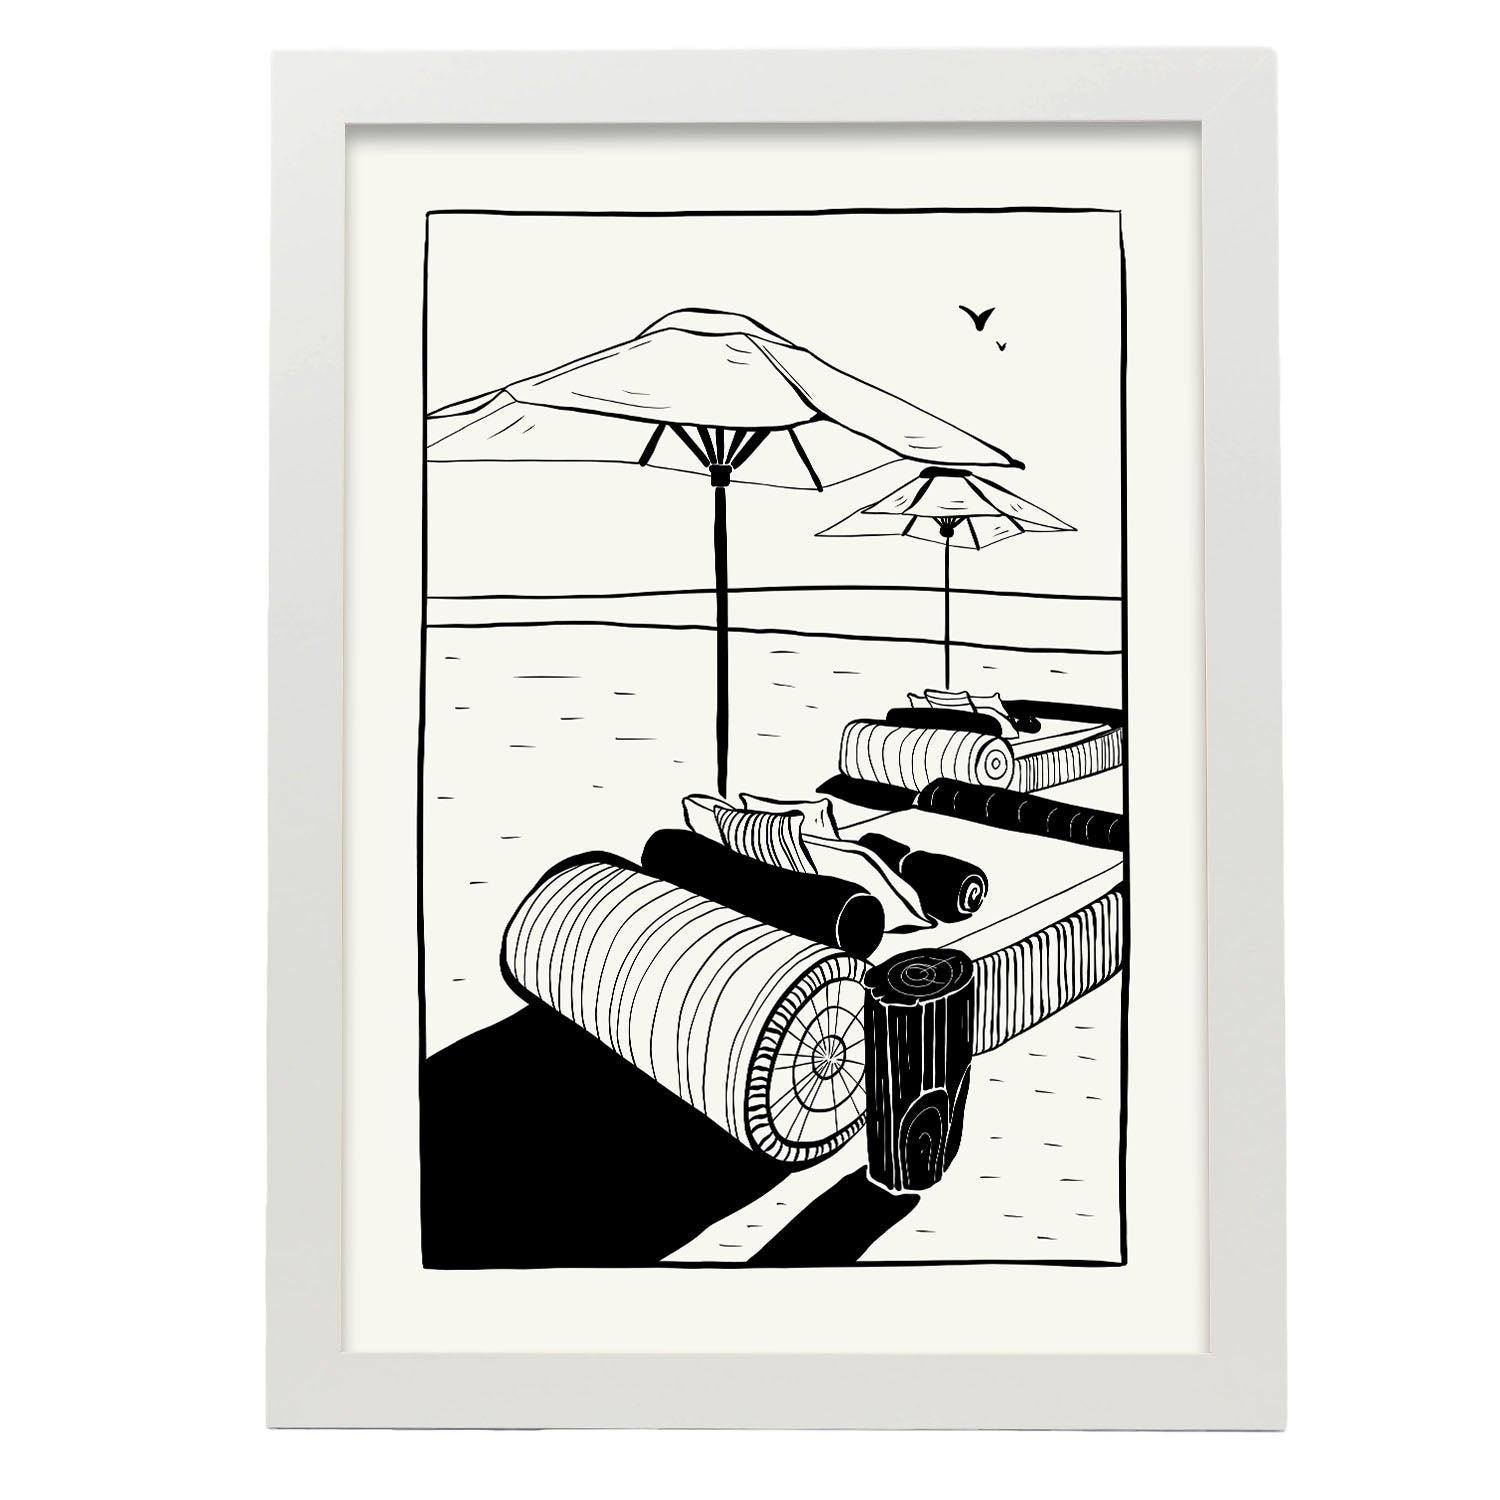 Beachside Umbrella-Artwork-Nacnic-A3-Marco Blanco-Nacnic Estudio SL